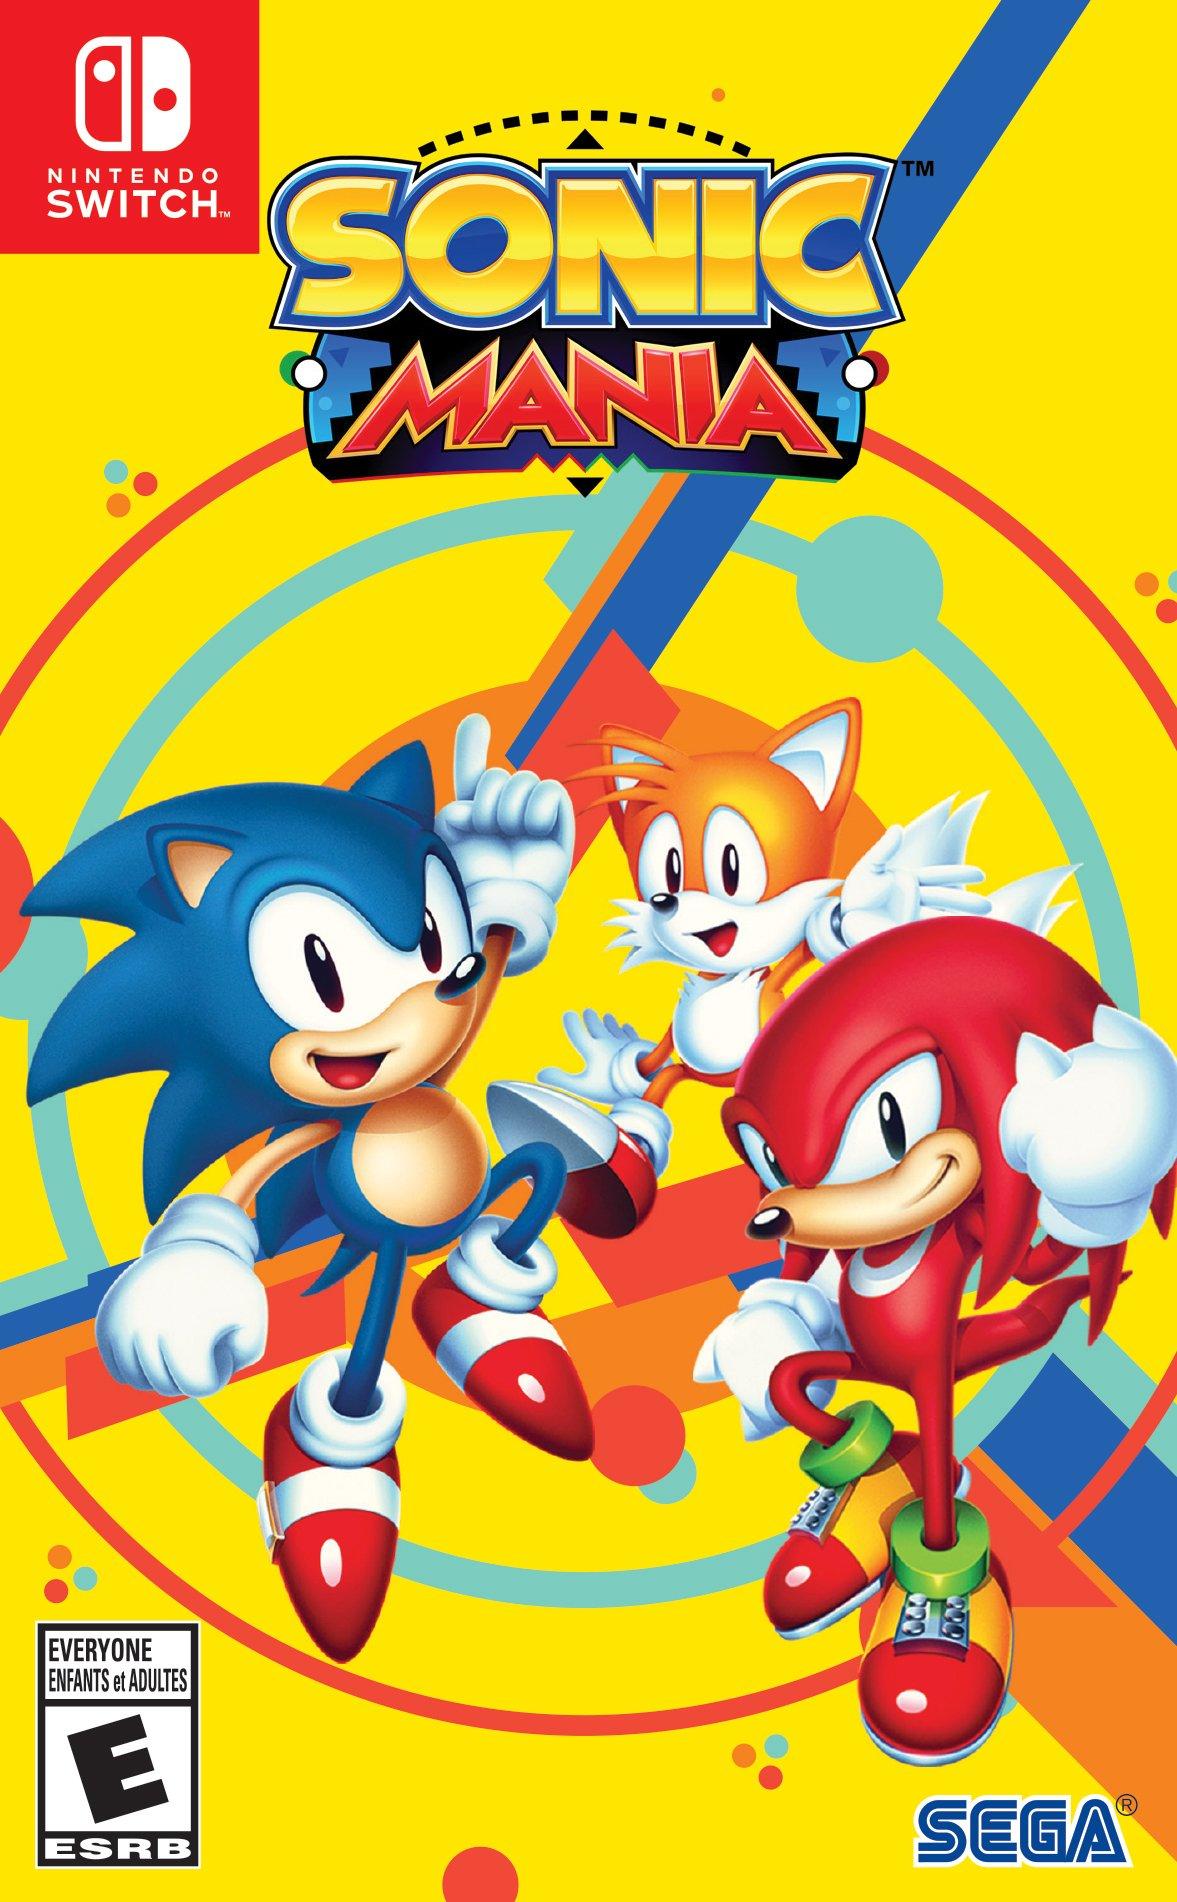 Play Sonic 2 Adventure Edition (v2.0) Online - Sega Genesis Classic Games  Online